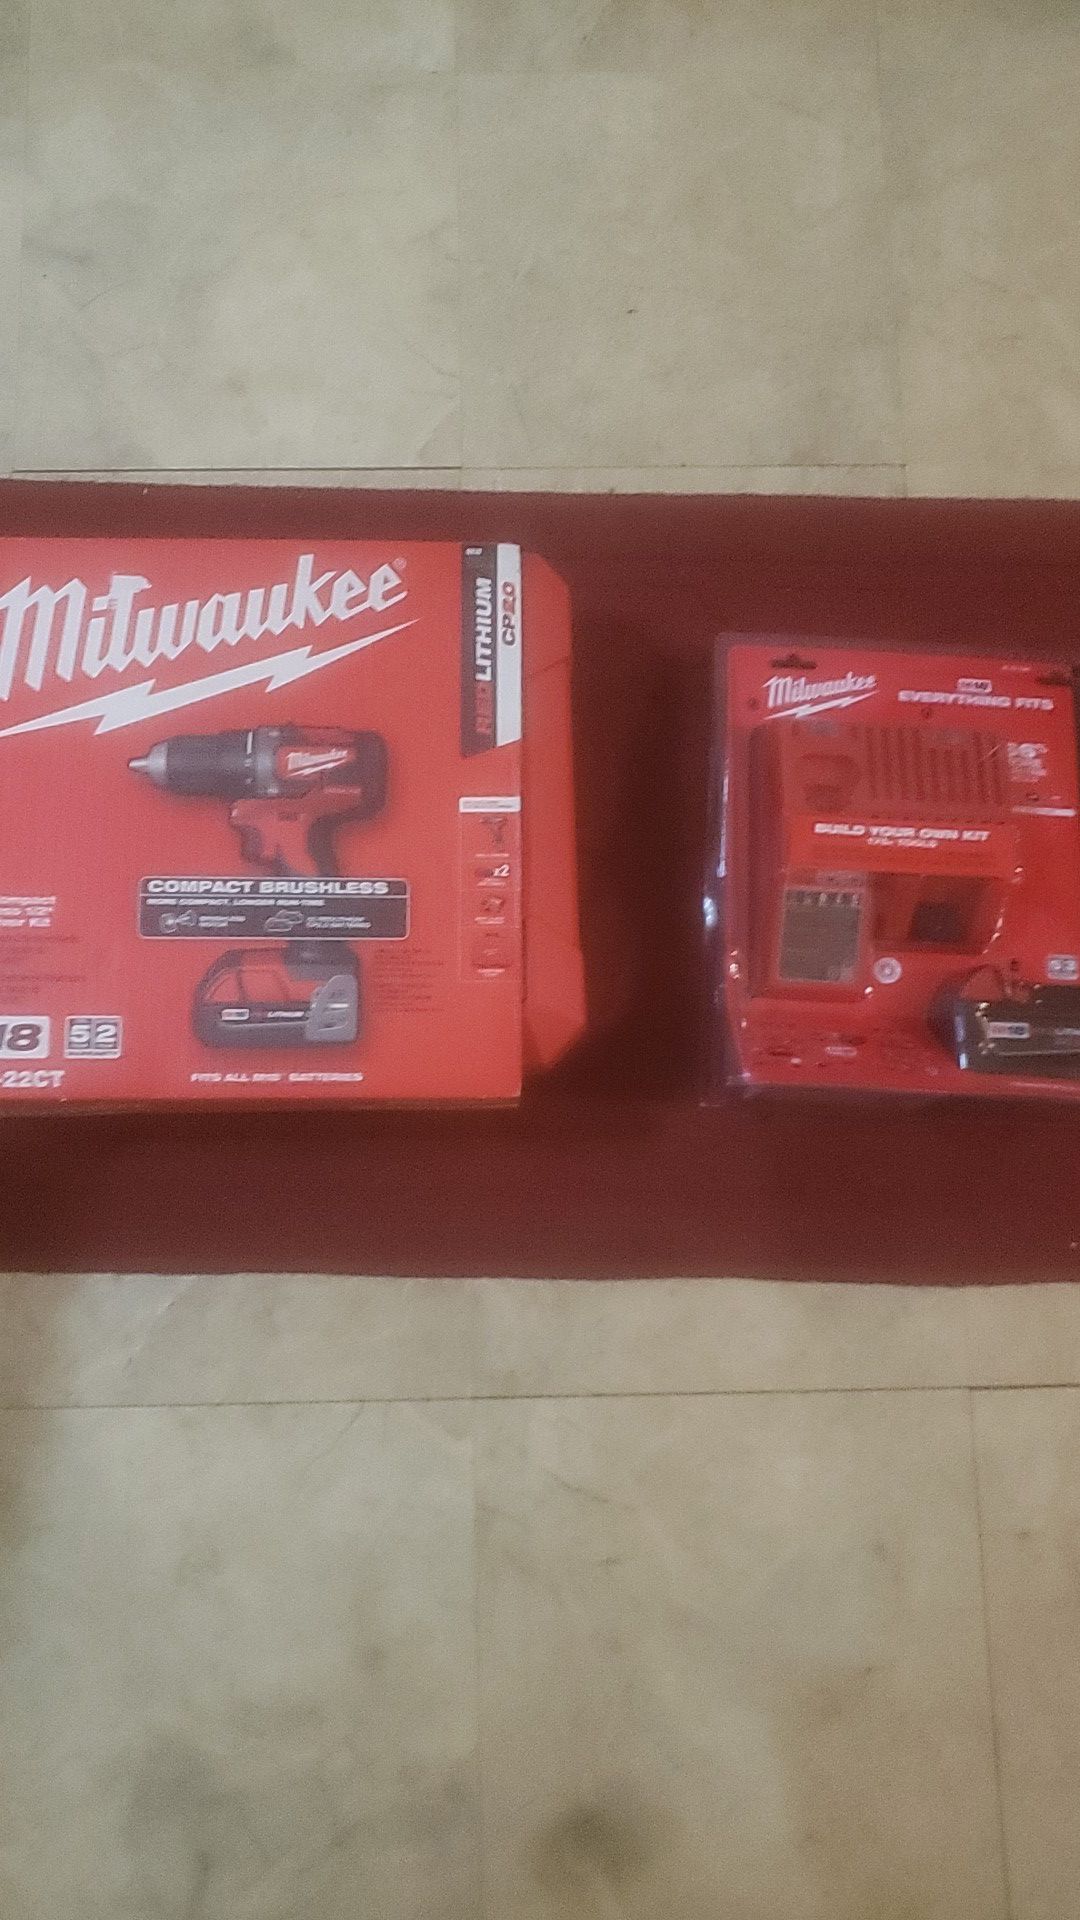 Milwaukee compact drill/driver kit